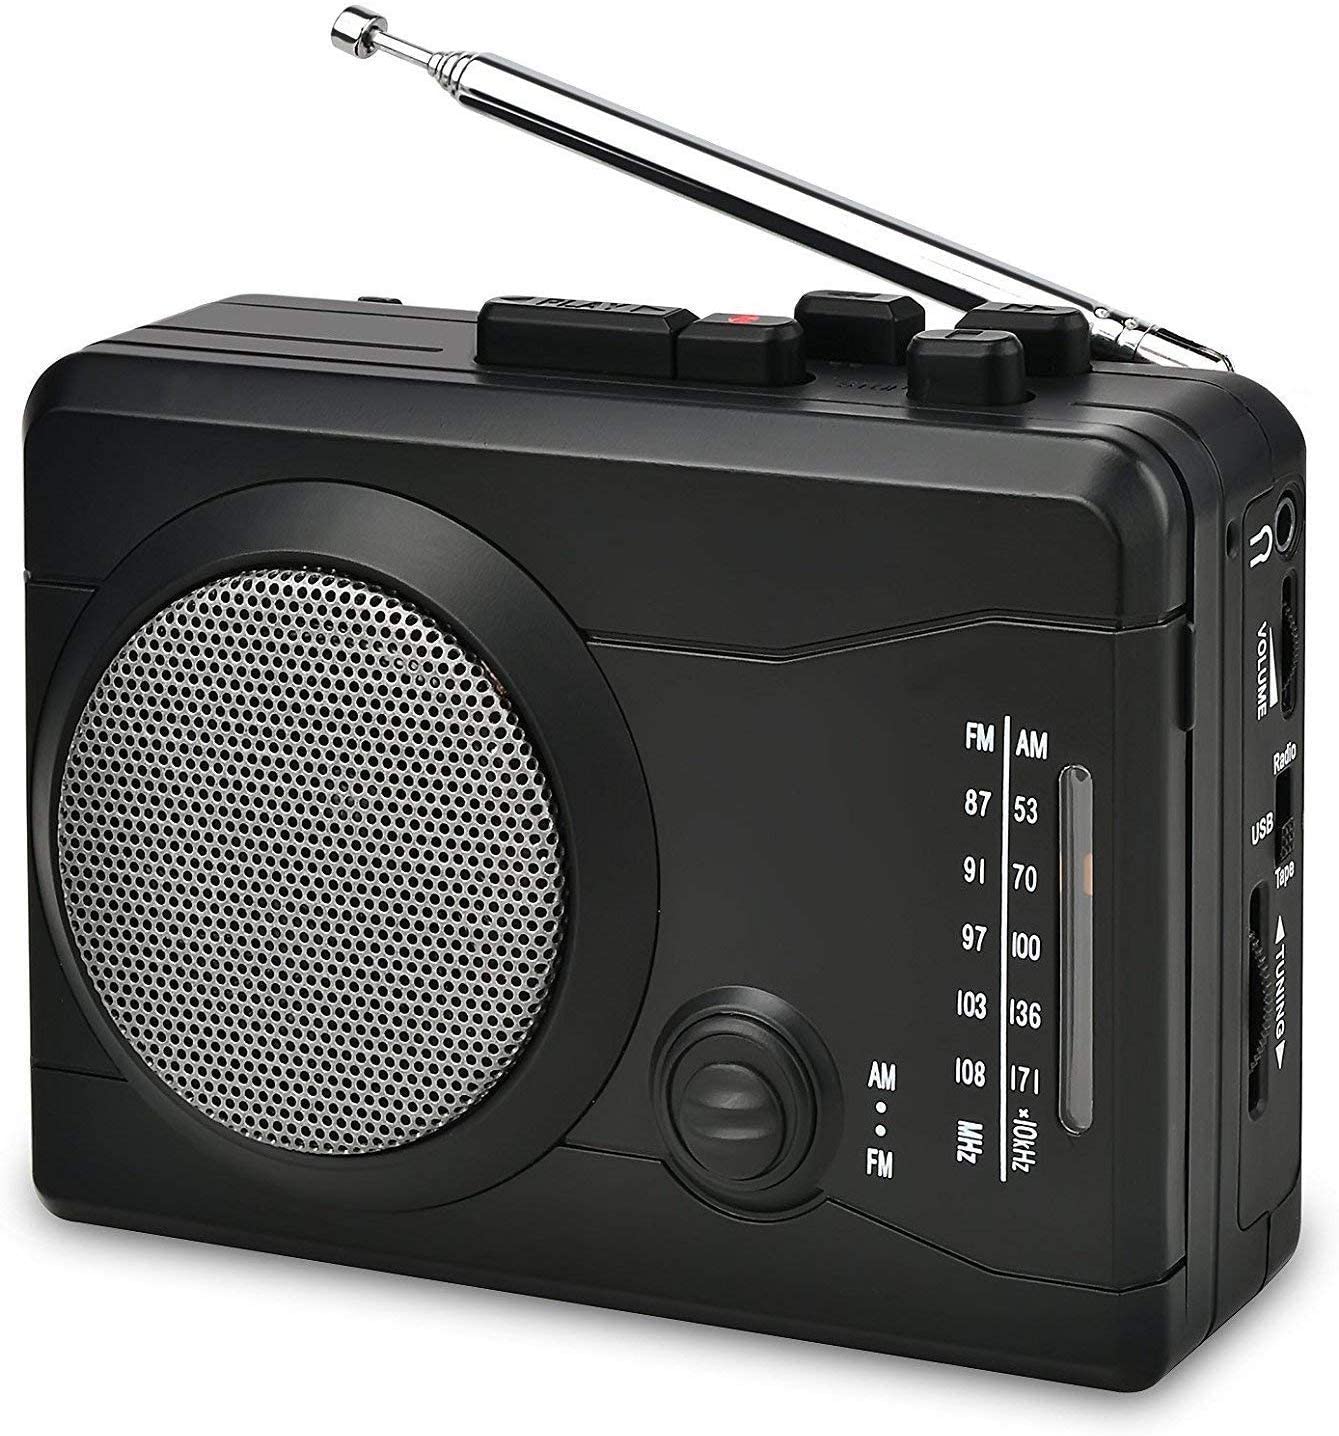 König - HAV-CA10 - Convertisseur Cassette / MP3 - Argent